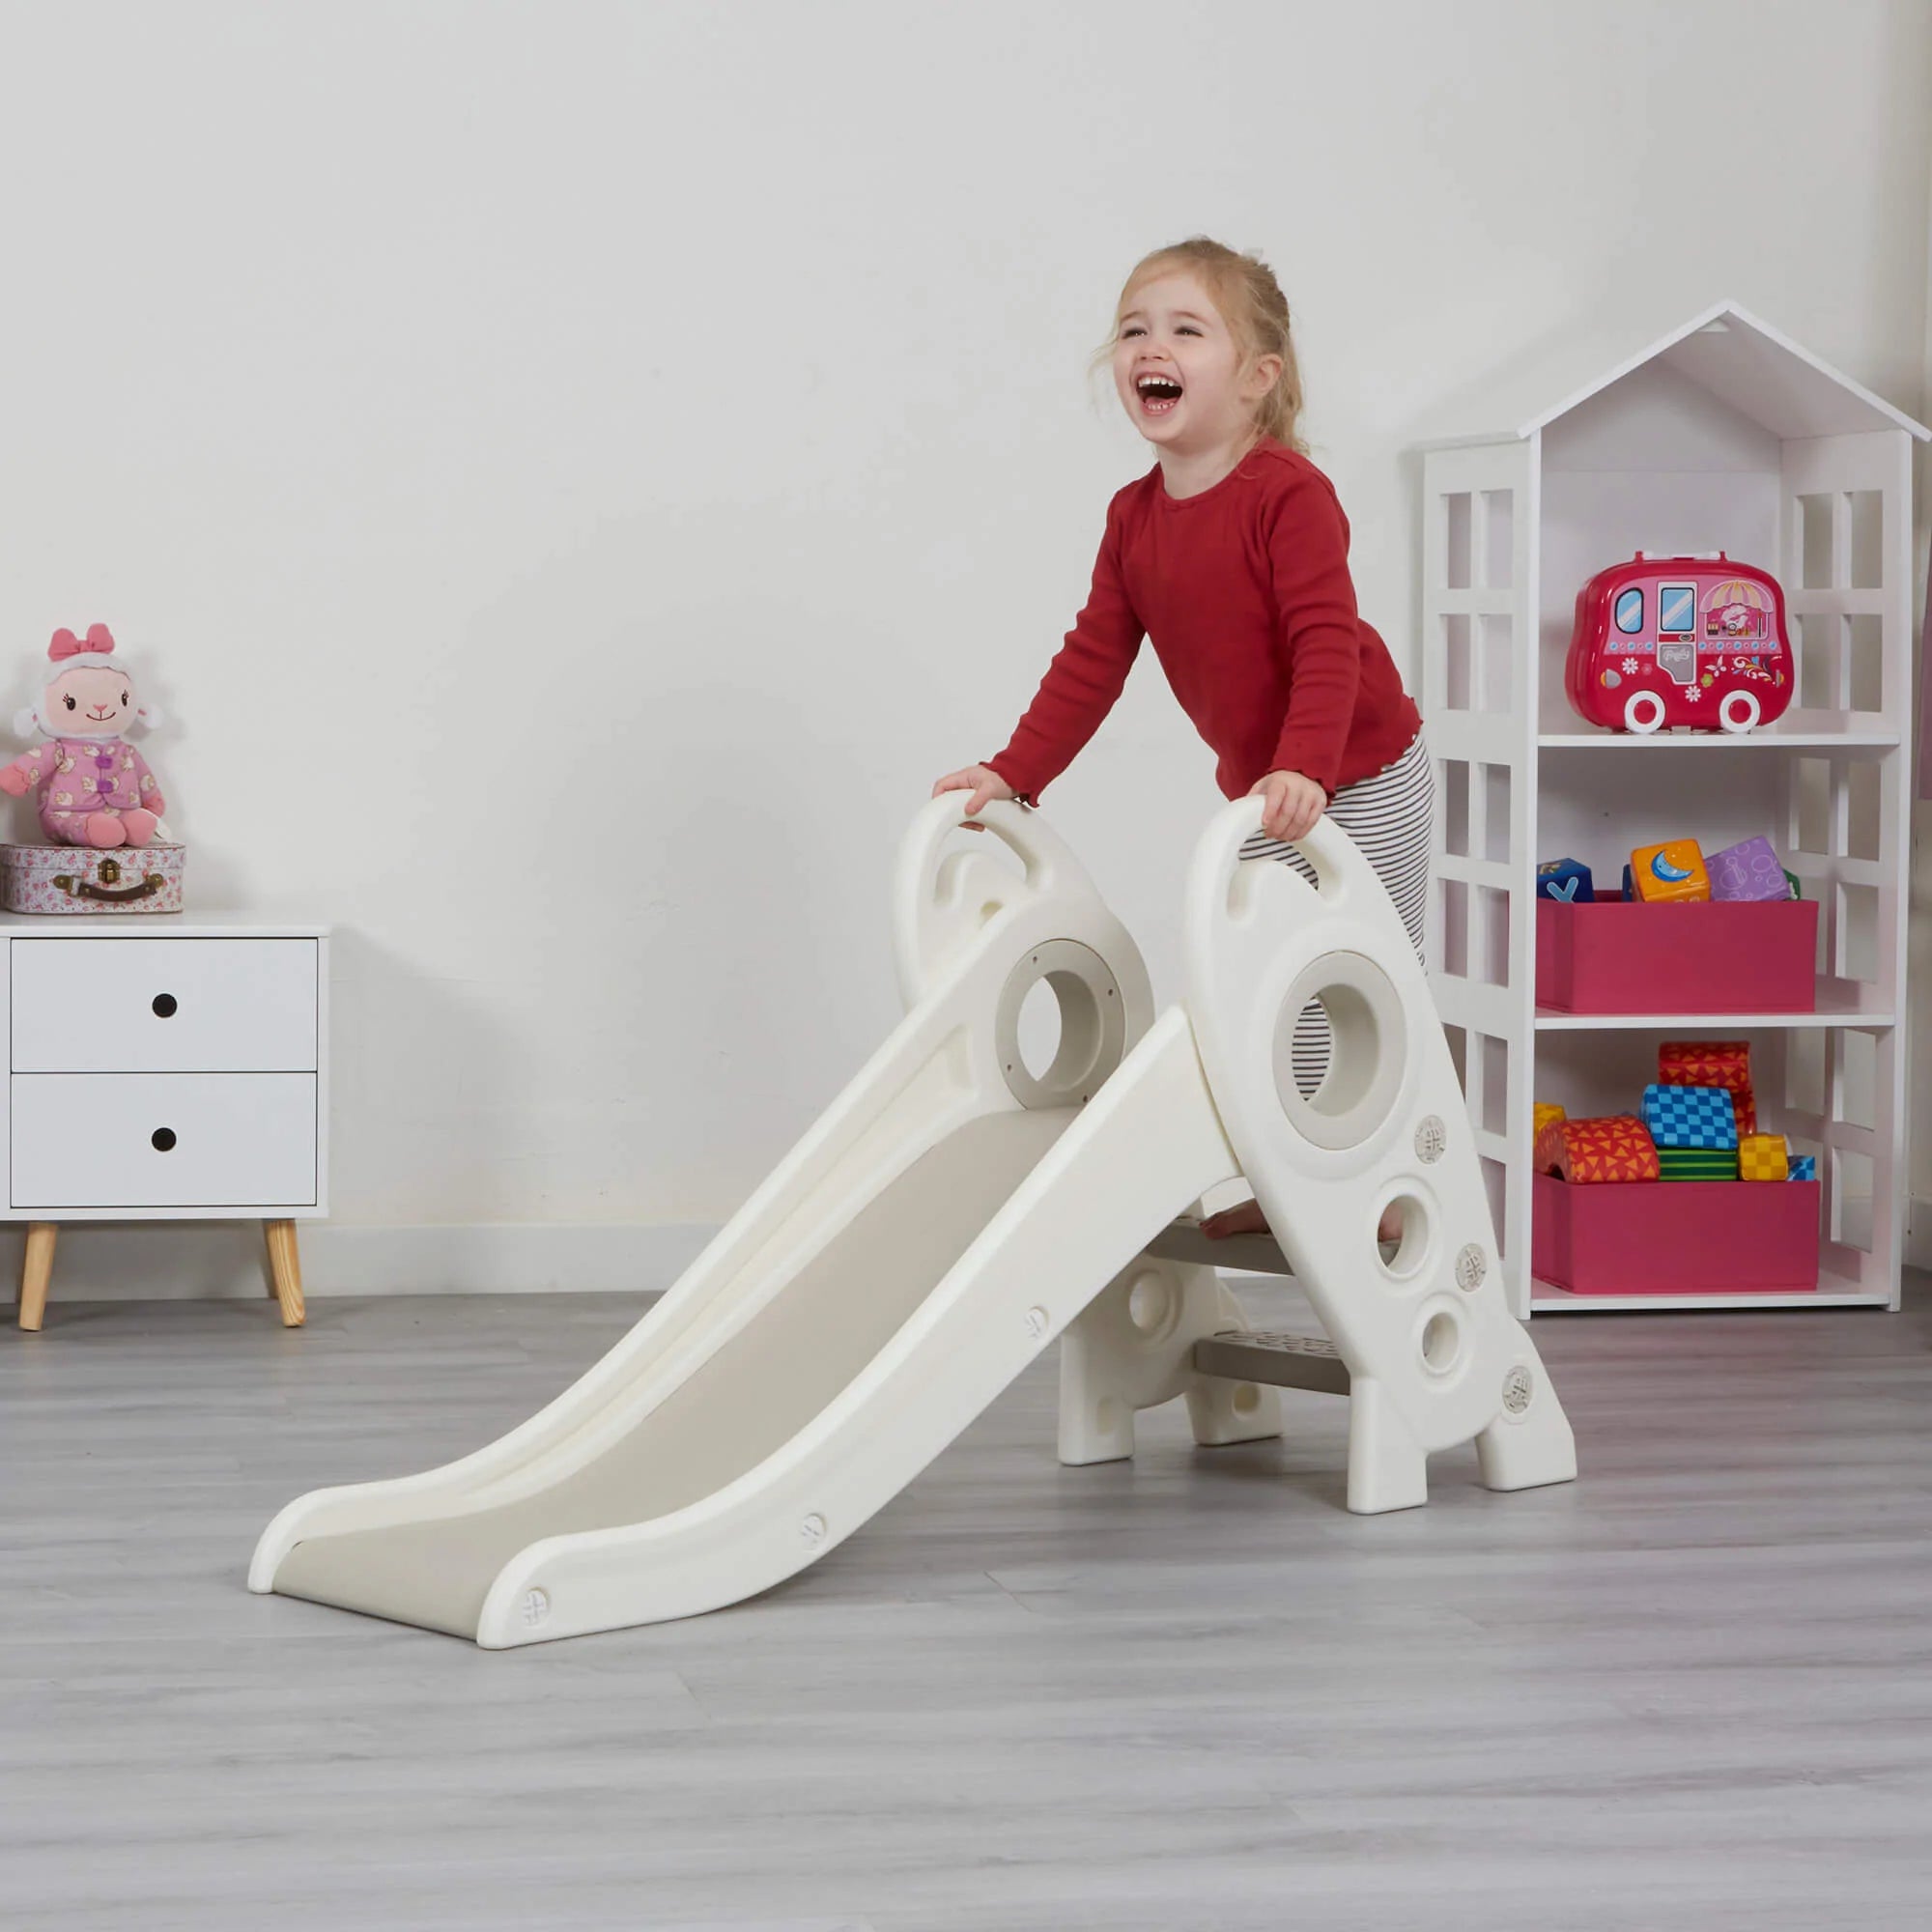 Kids Foldable Rocket Slide - White & Grey